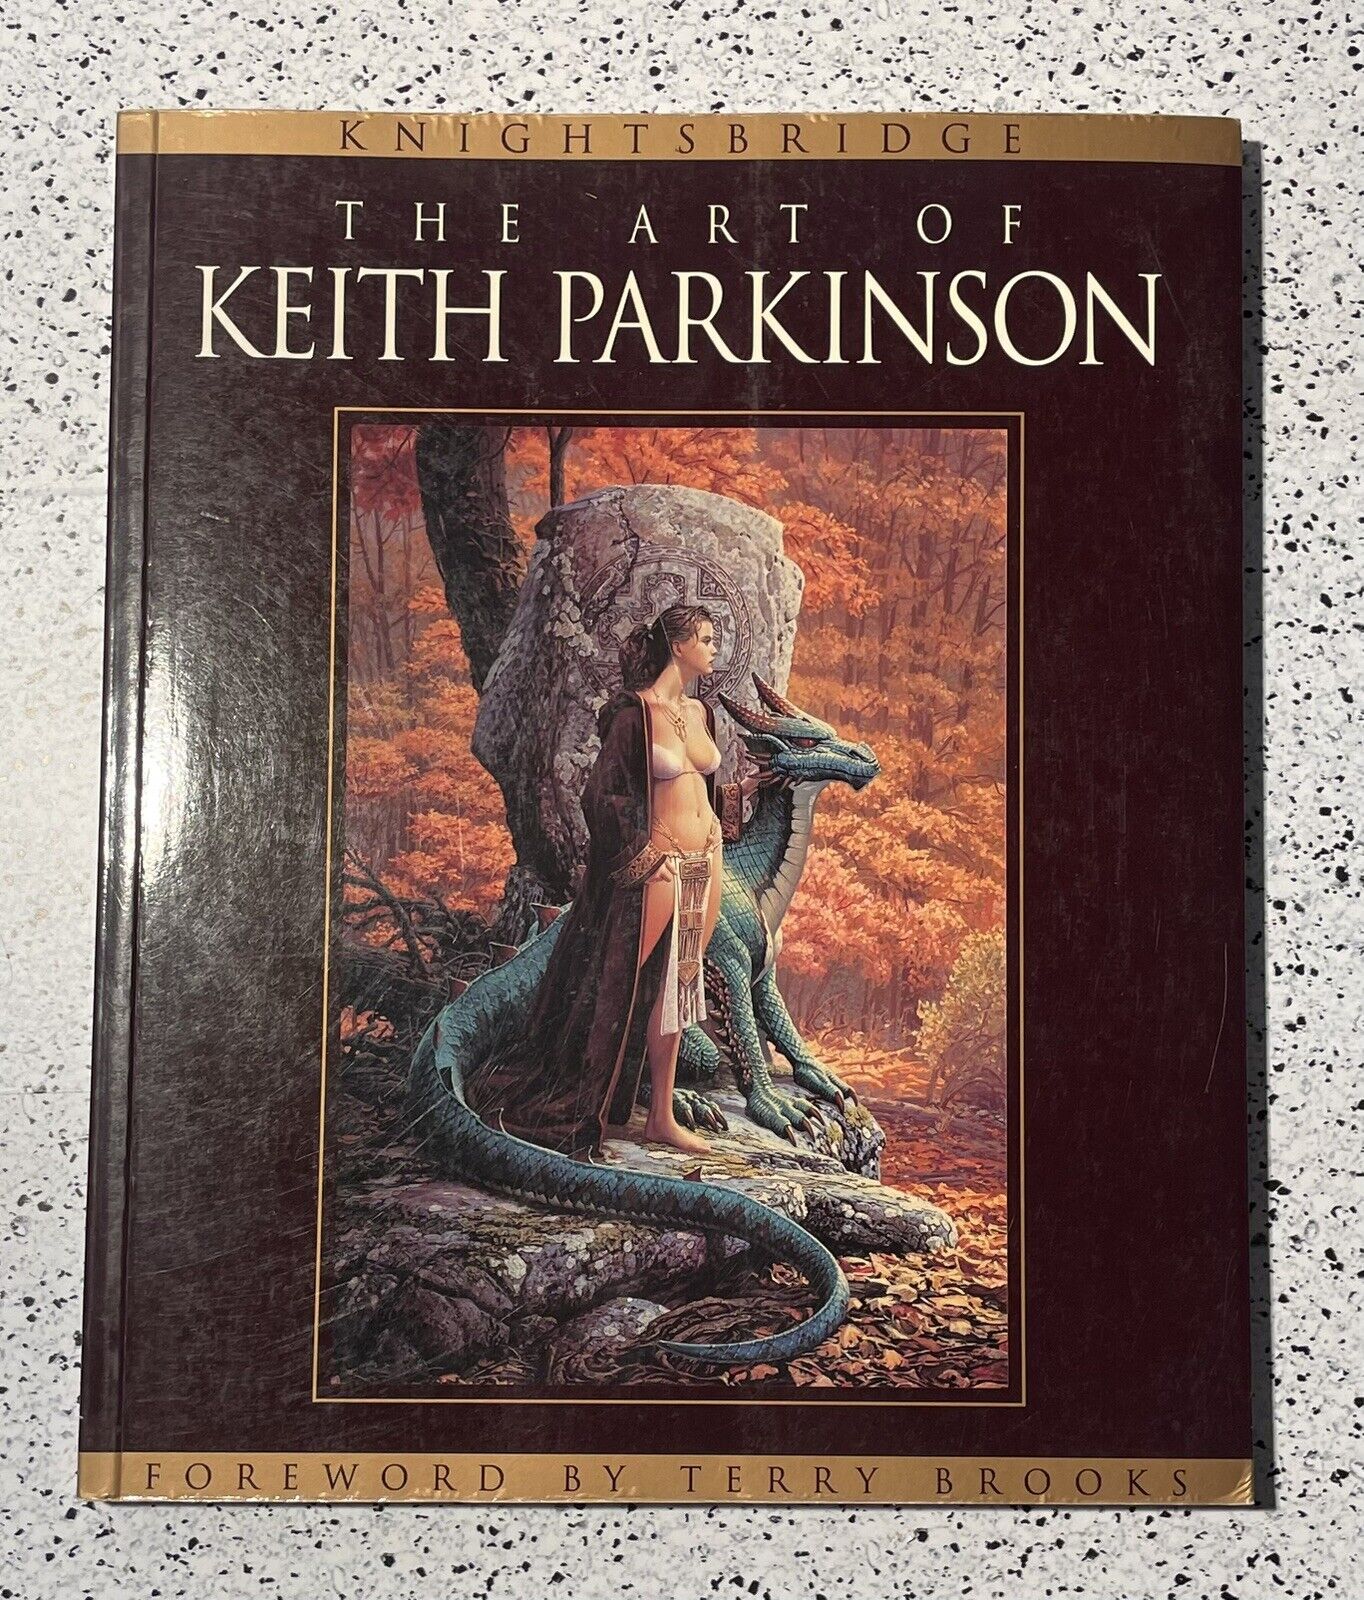 Knightsbridge The Art Of Keith Parkinson FPG 1996 First Printing